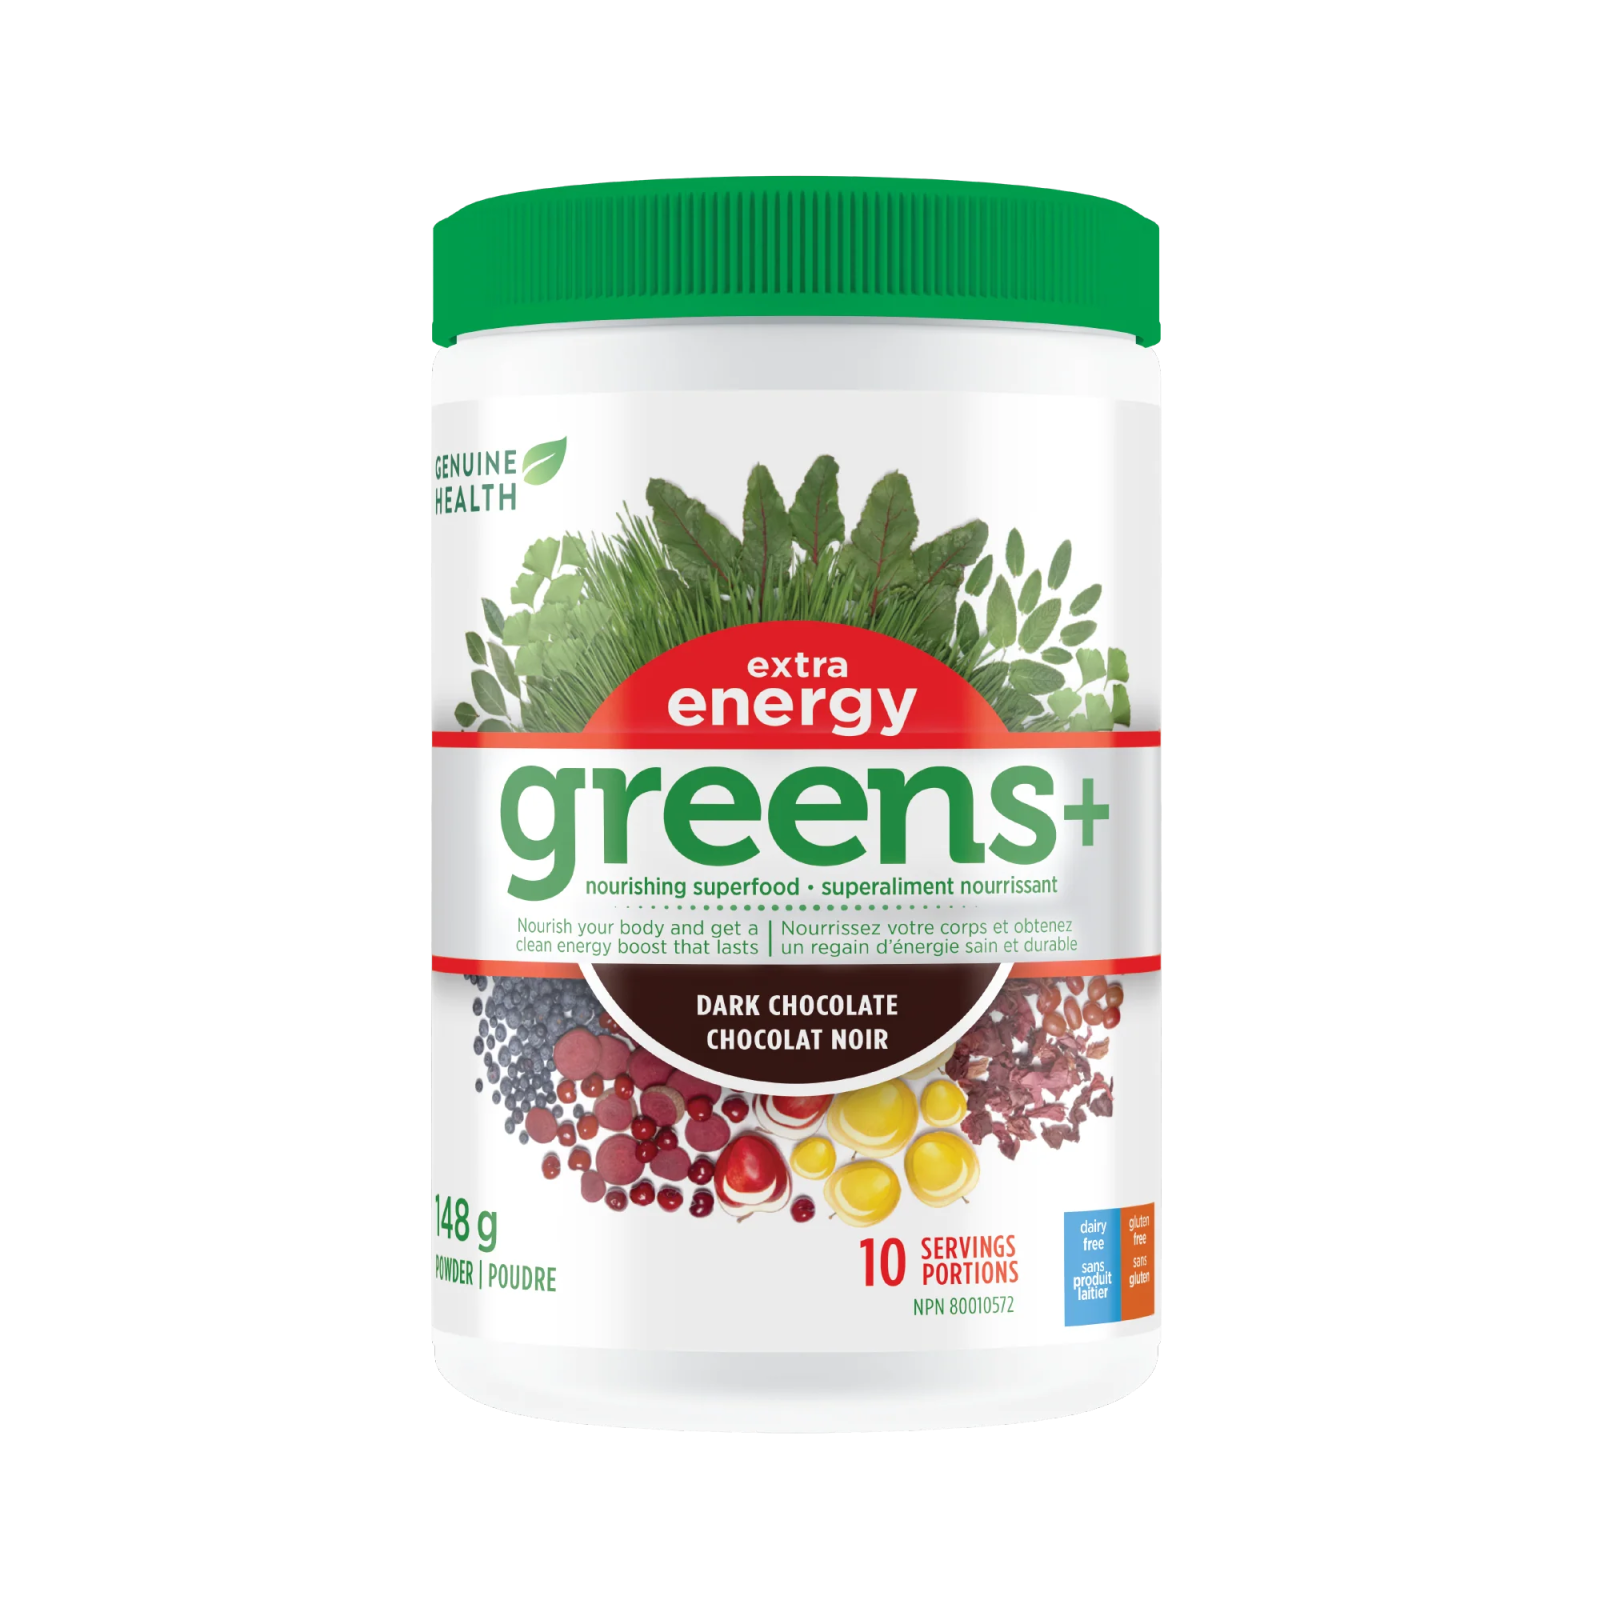 Genuine Health greens+ extra energy dark chocolate (148g)